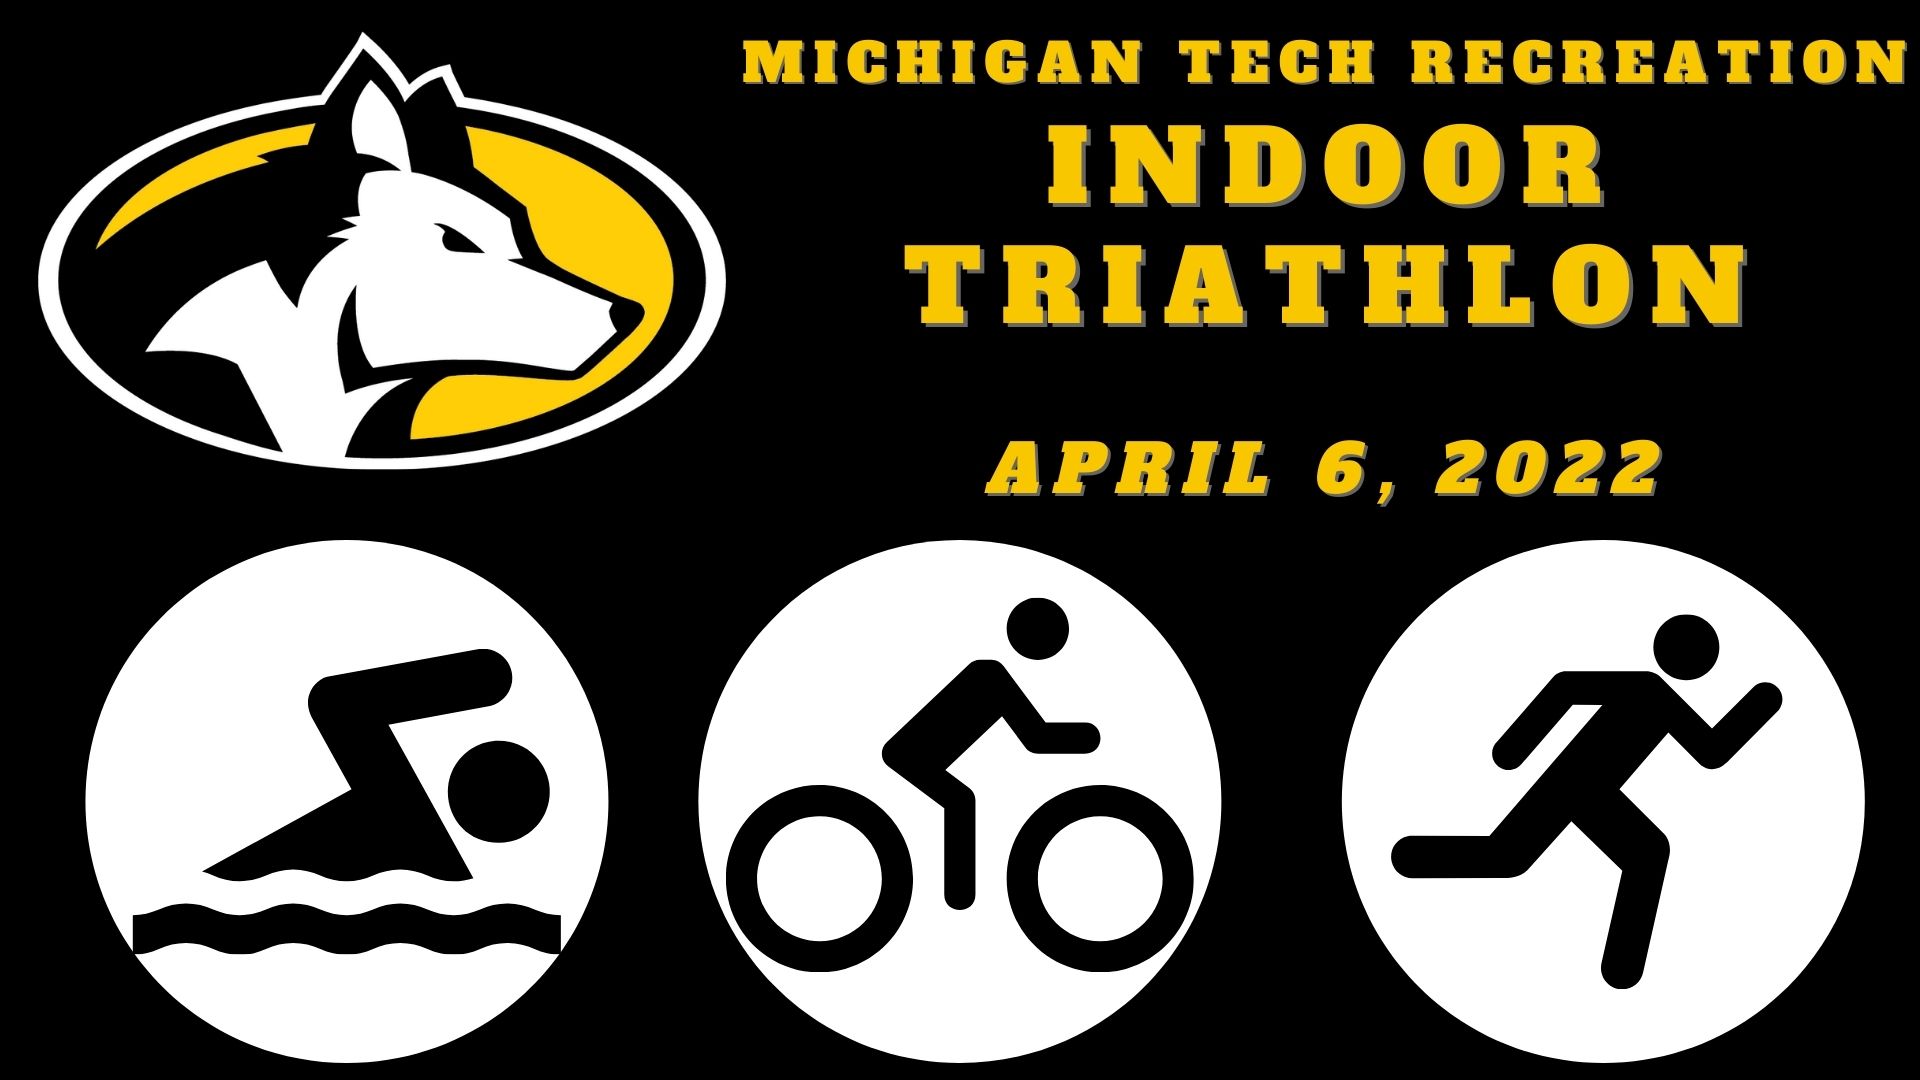 Michigan Tech Recreation Indoor Triathlon April 6, 2022